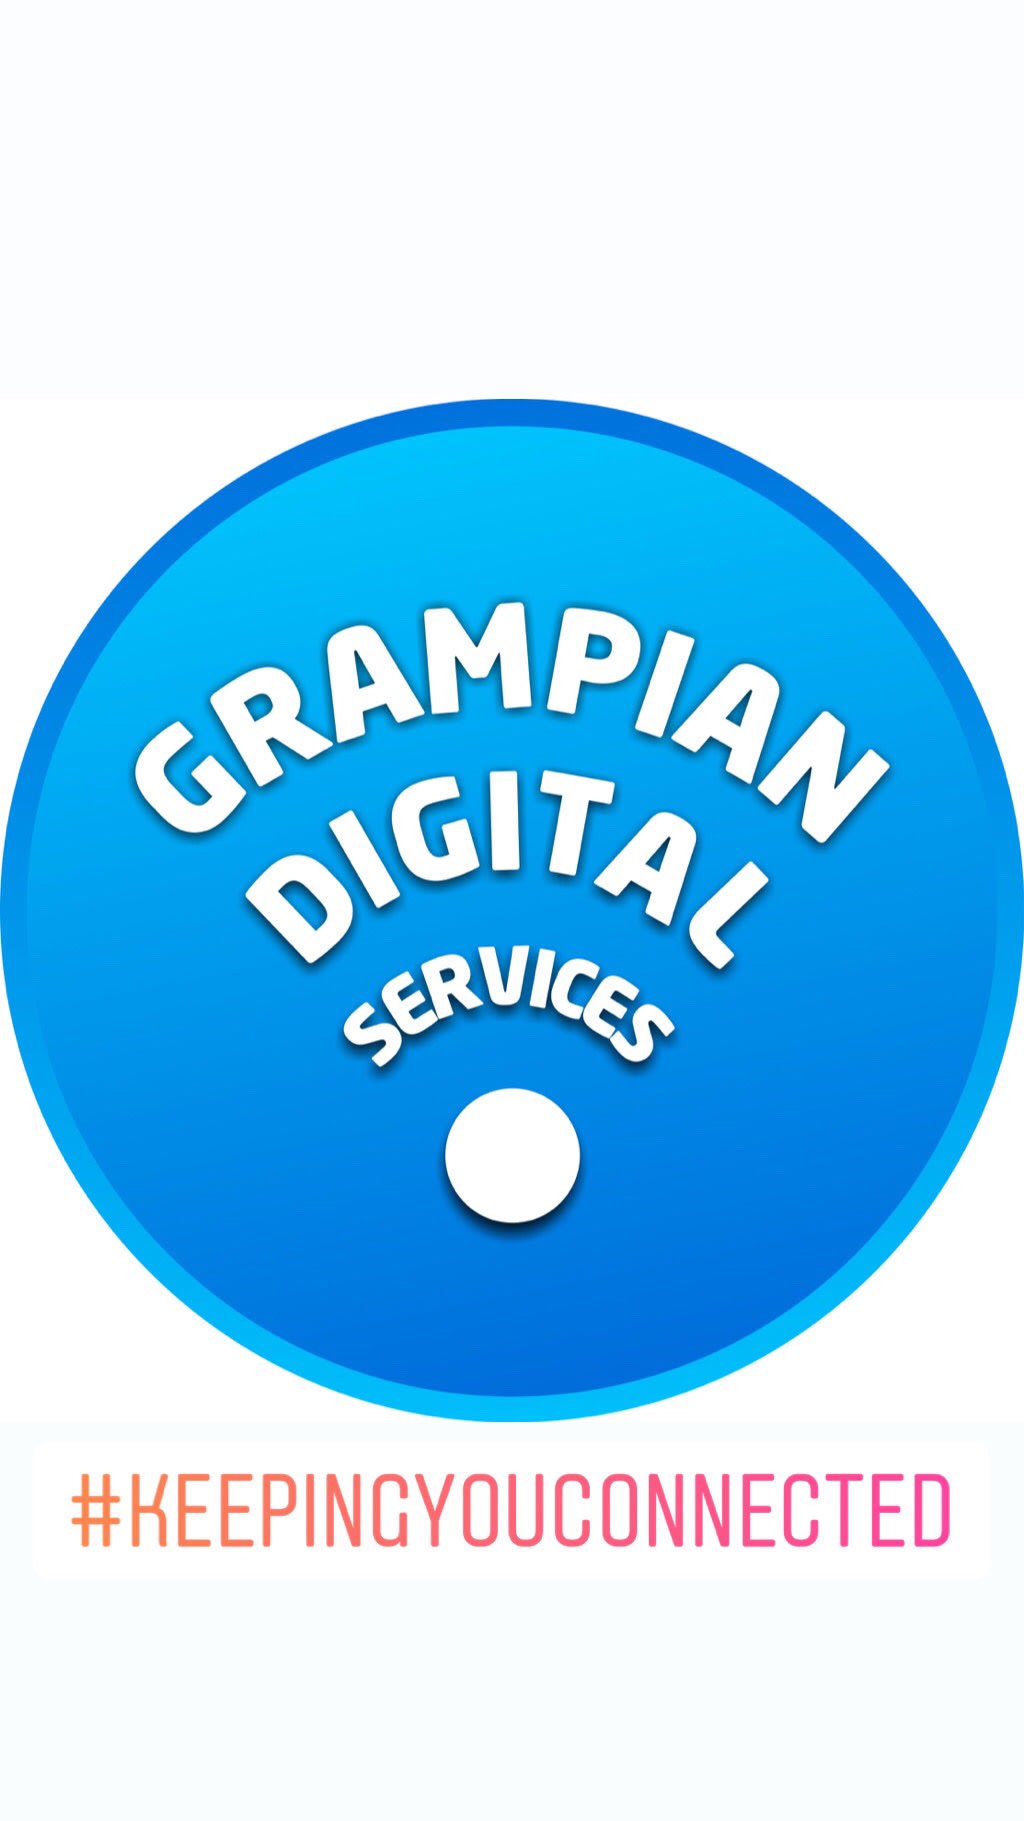 Images Grampian Digital Services